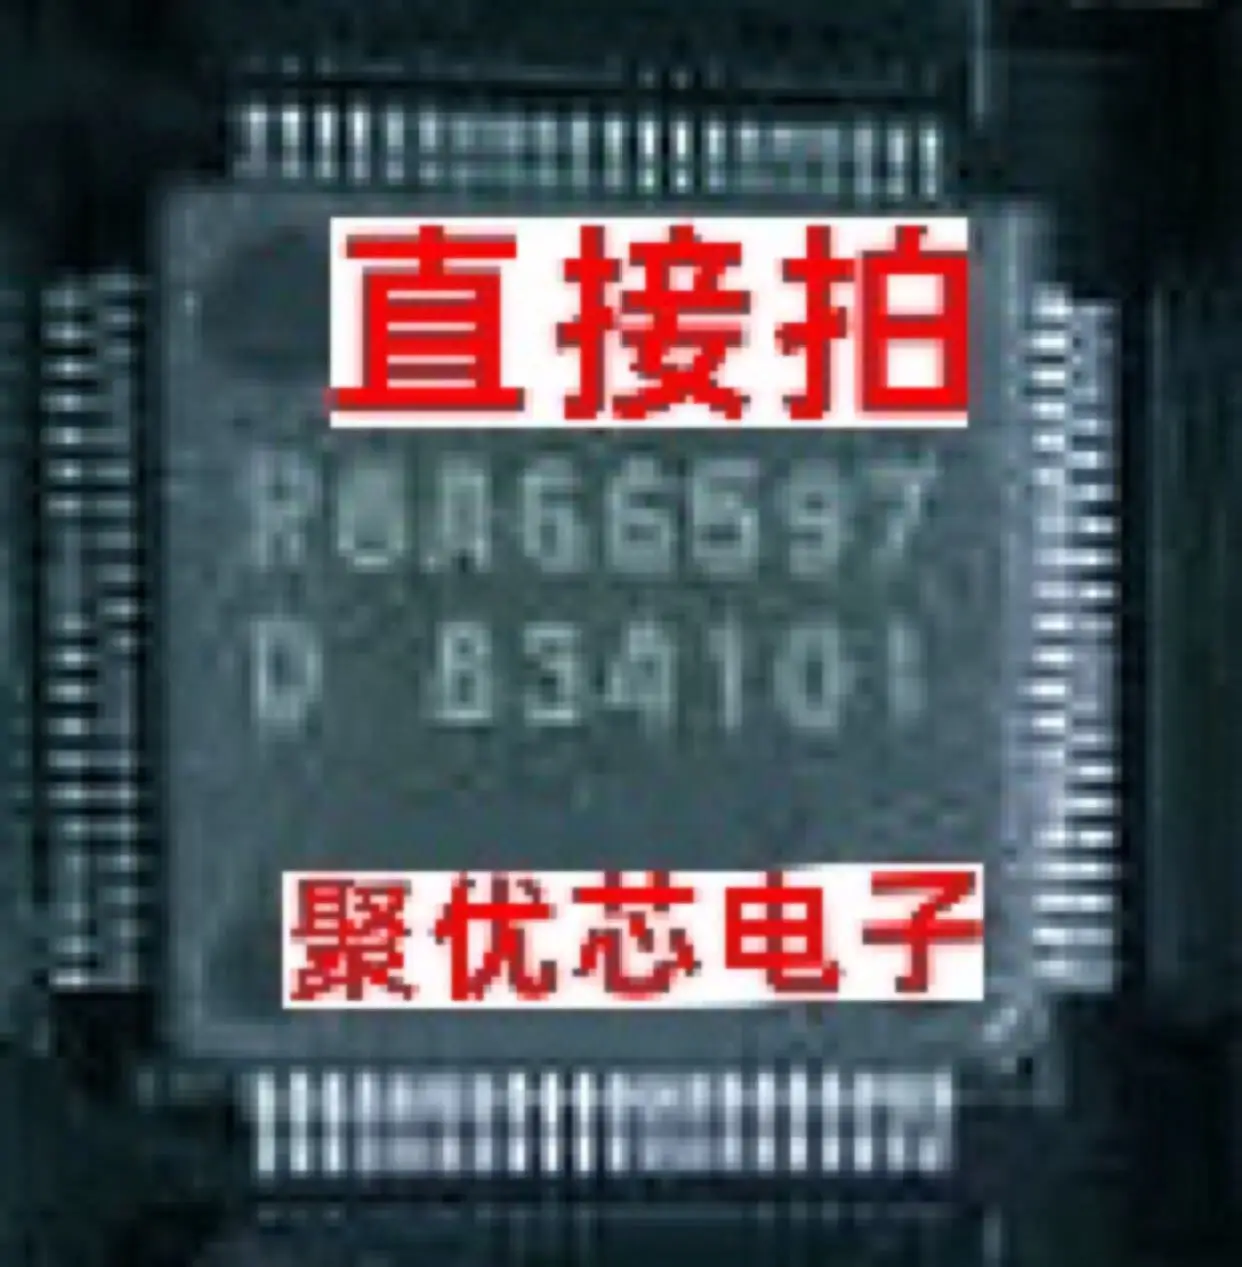 QFP80 USB, R8A66597, RBA66597